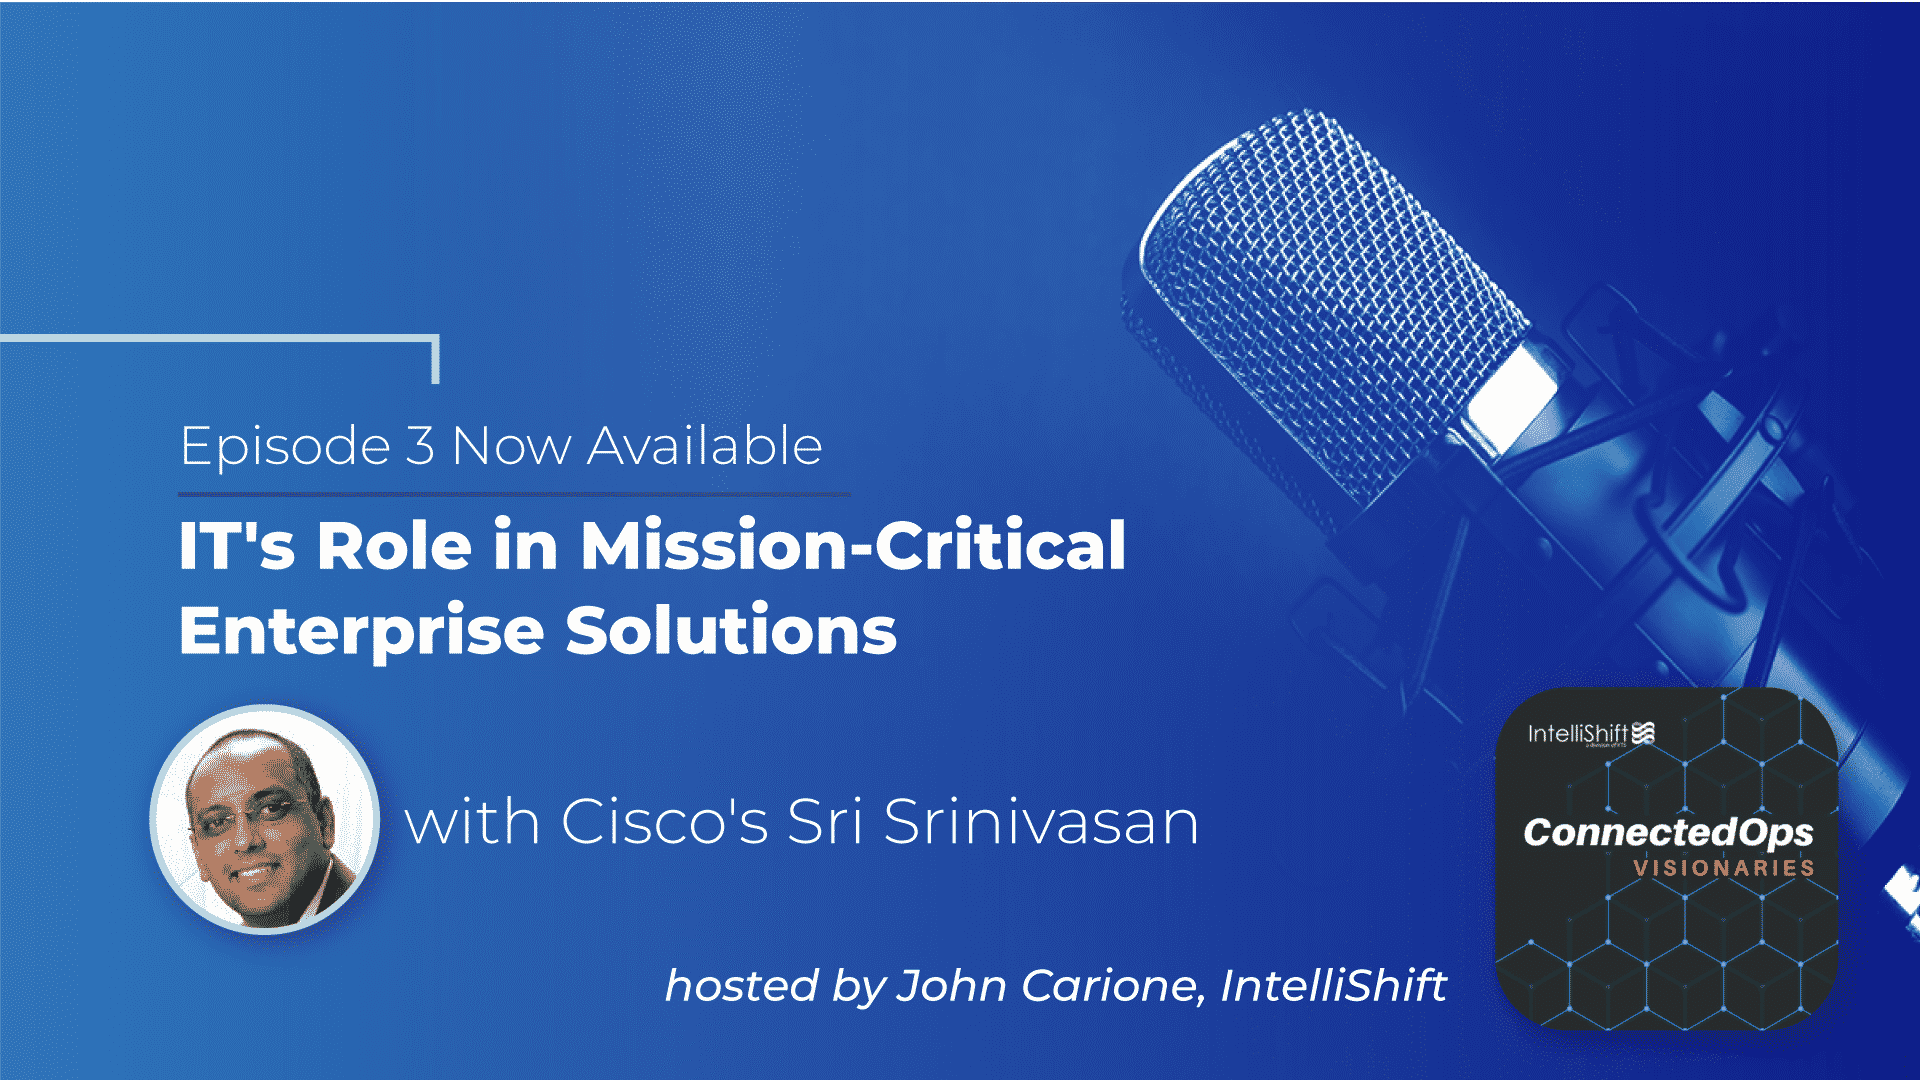 Episode 3: IT’s Role in Mission-Critical Enterprise Solutions with Cisco’s Sri Srinivasan